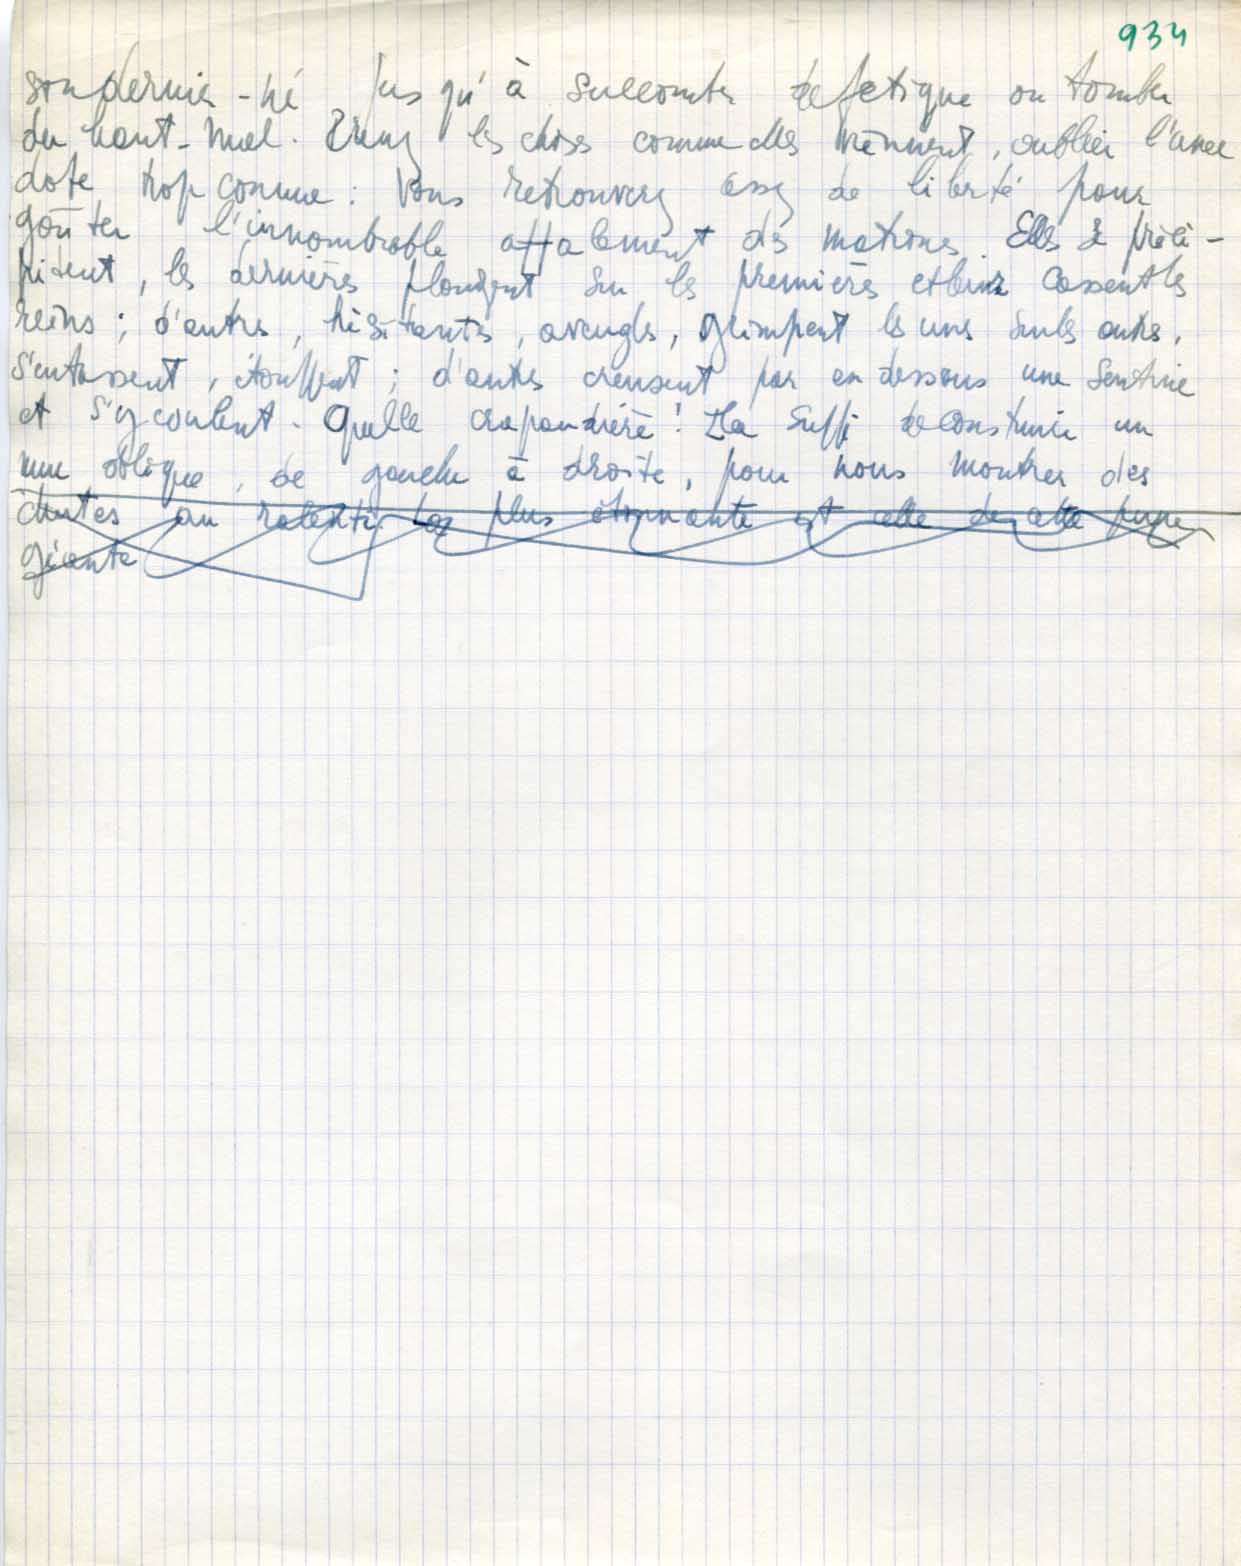 Jean-Paul Sartre 963 Seiten Manuskript über Tintoretto